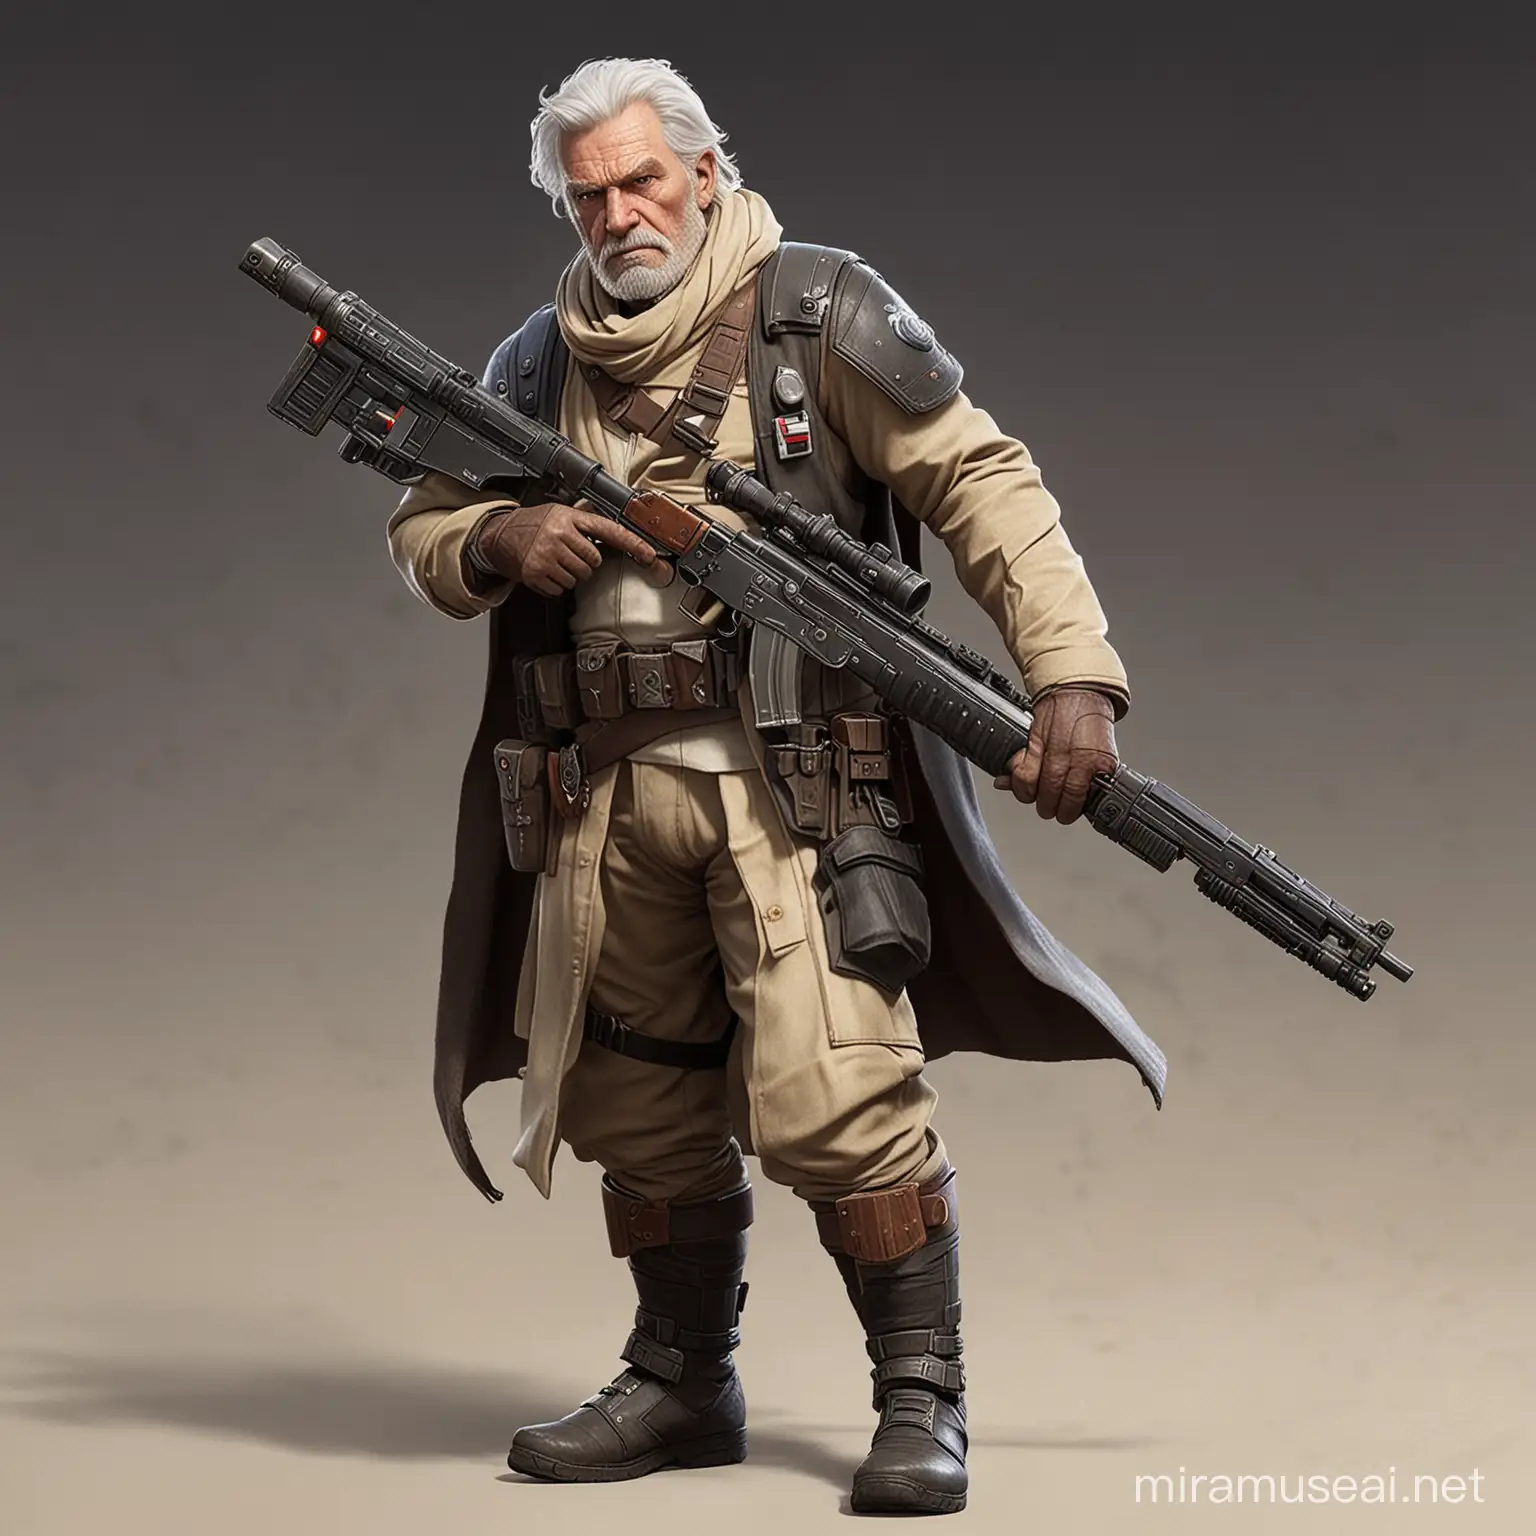 Starwar mercenary old age bad attitude